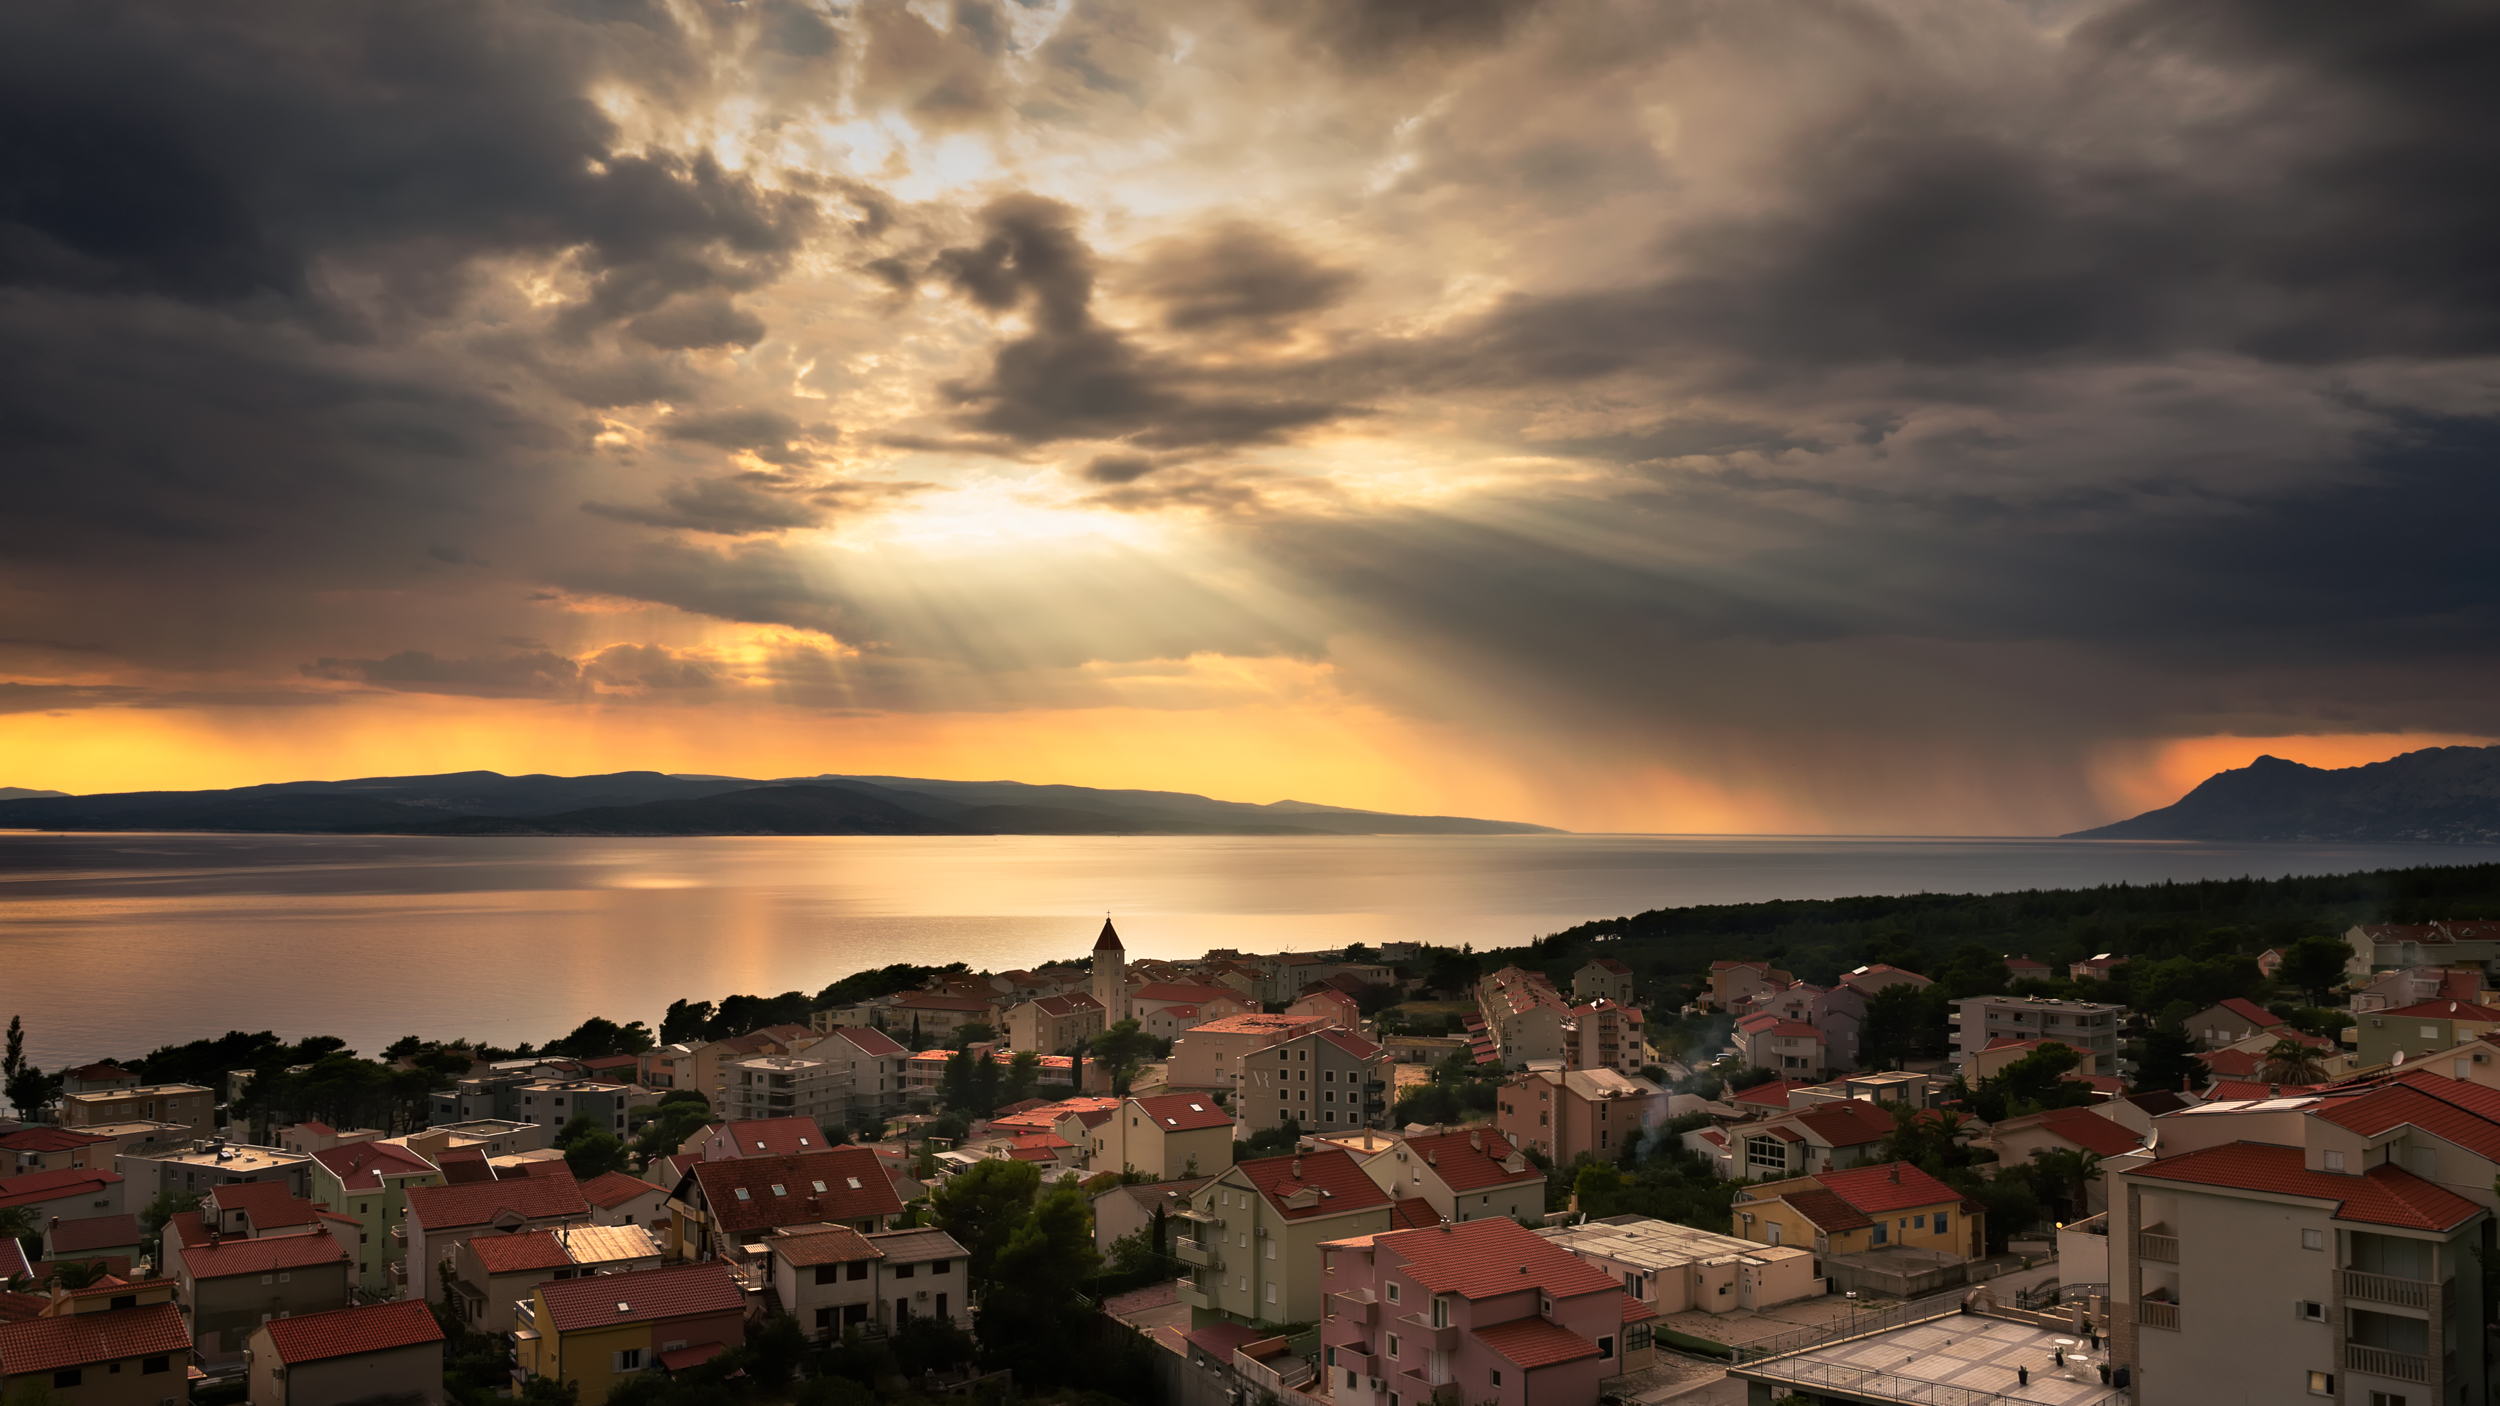  Beautiful sunset with rain clouds in Promanja - Croatia 